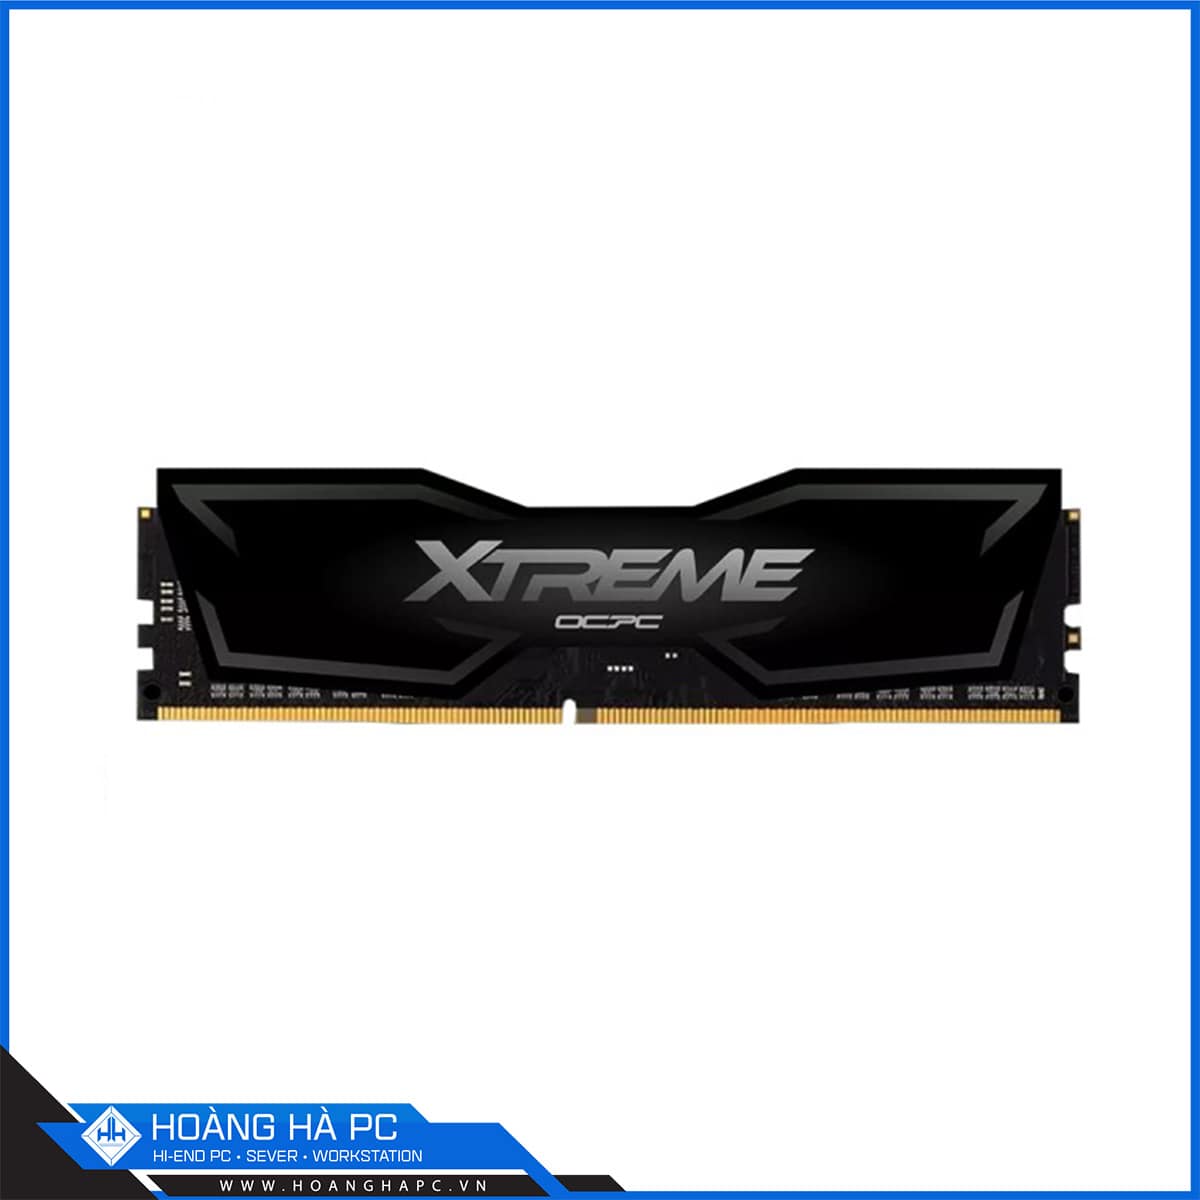 RAM OCPC XTREME 8GB (1x8GB) DDR4 3200MHz (Black/White)